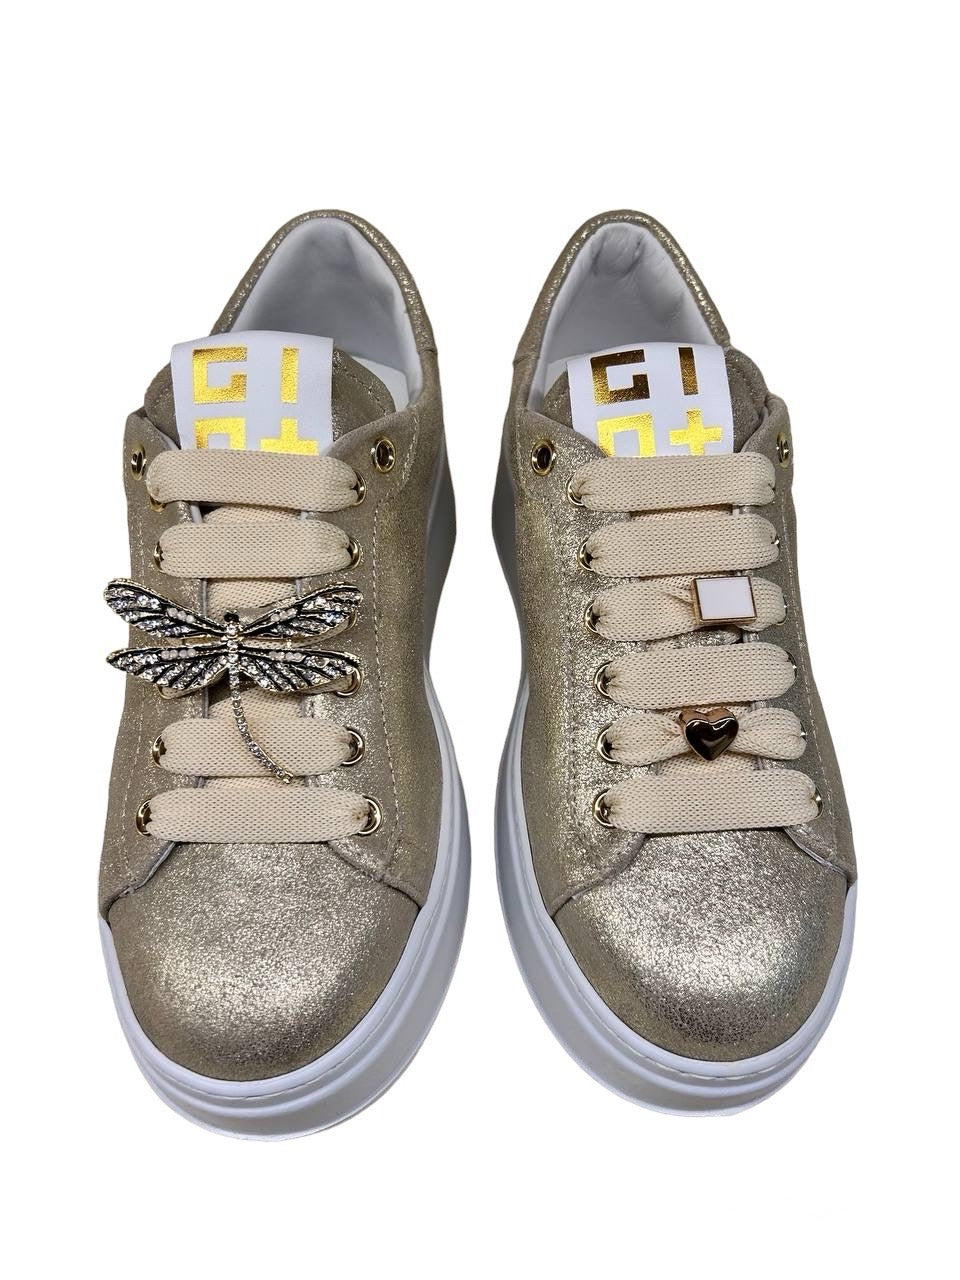 GIO+ Sneakers laminata libellula